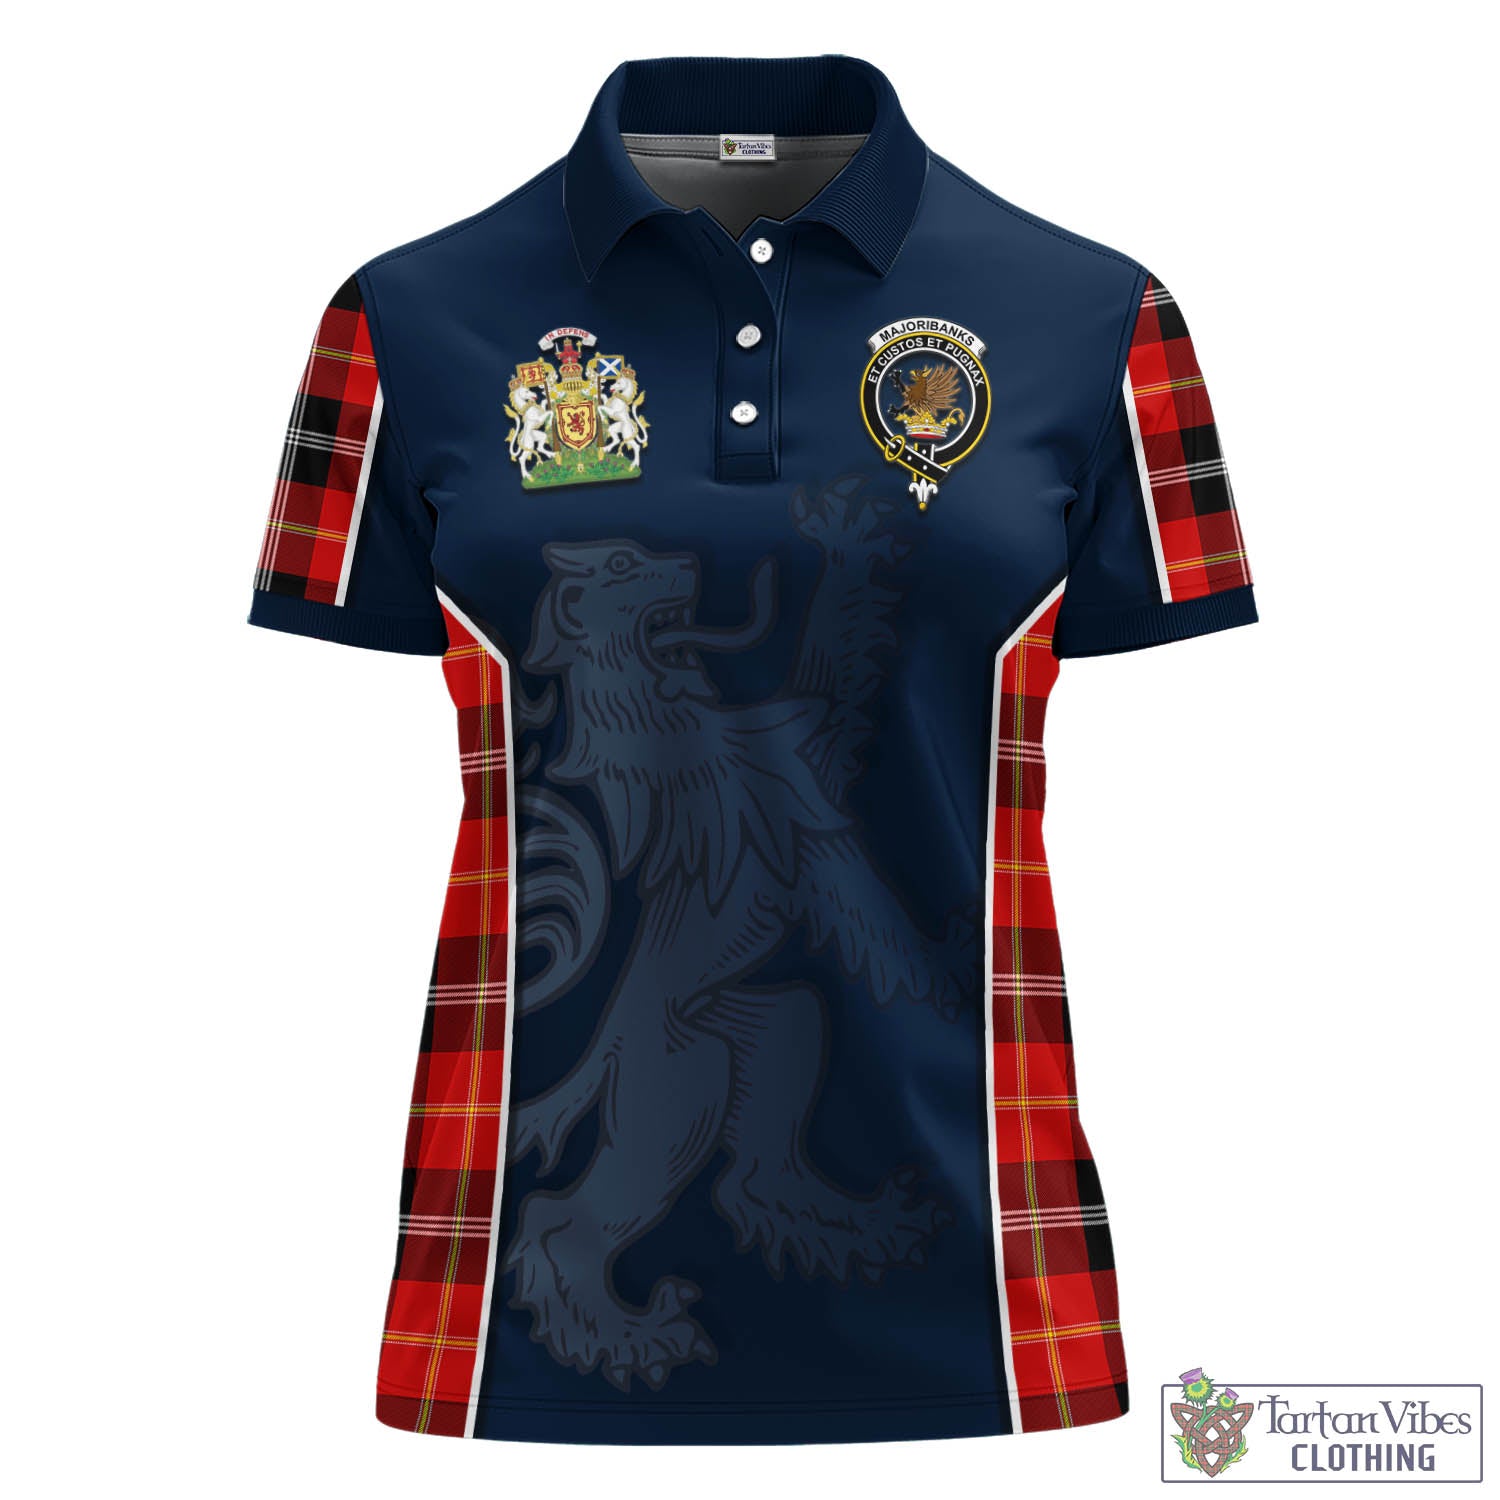 Tartan Vibes Clothing Majoribanks Tartan Women's Polo Shirt with Family Crest and Lion Rampant Vibes Sport Style